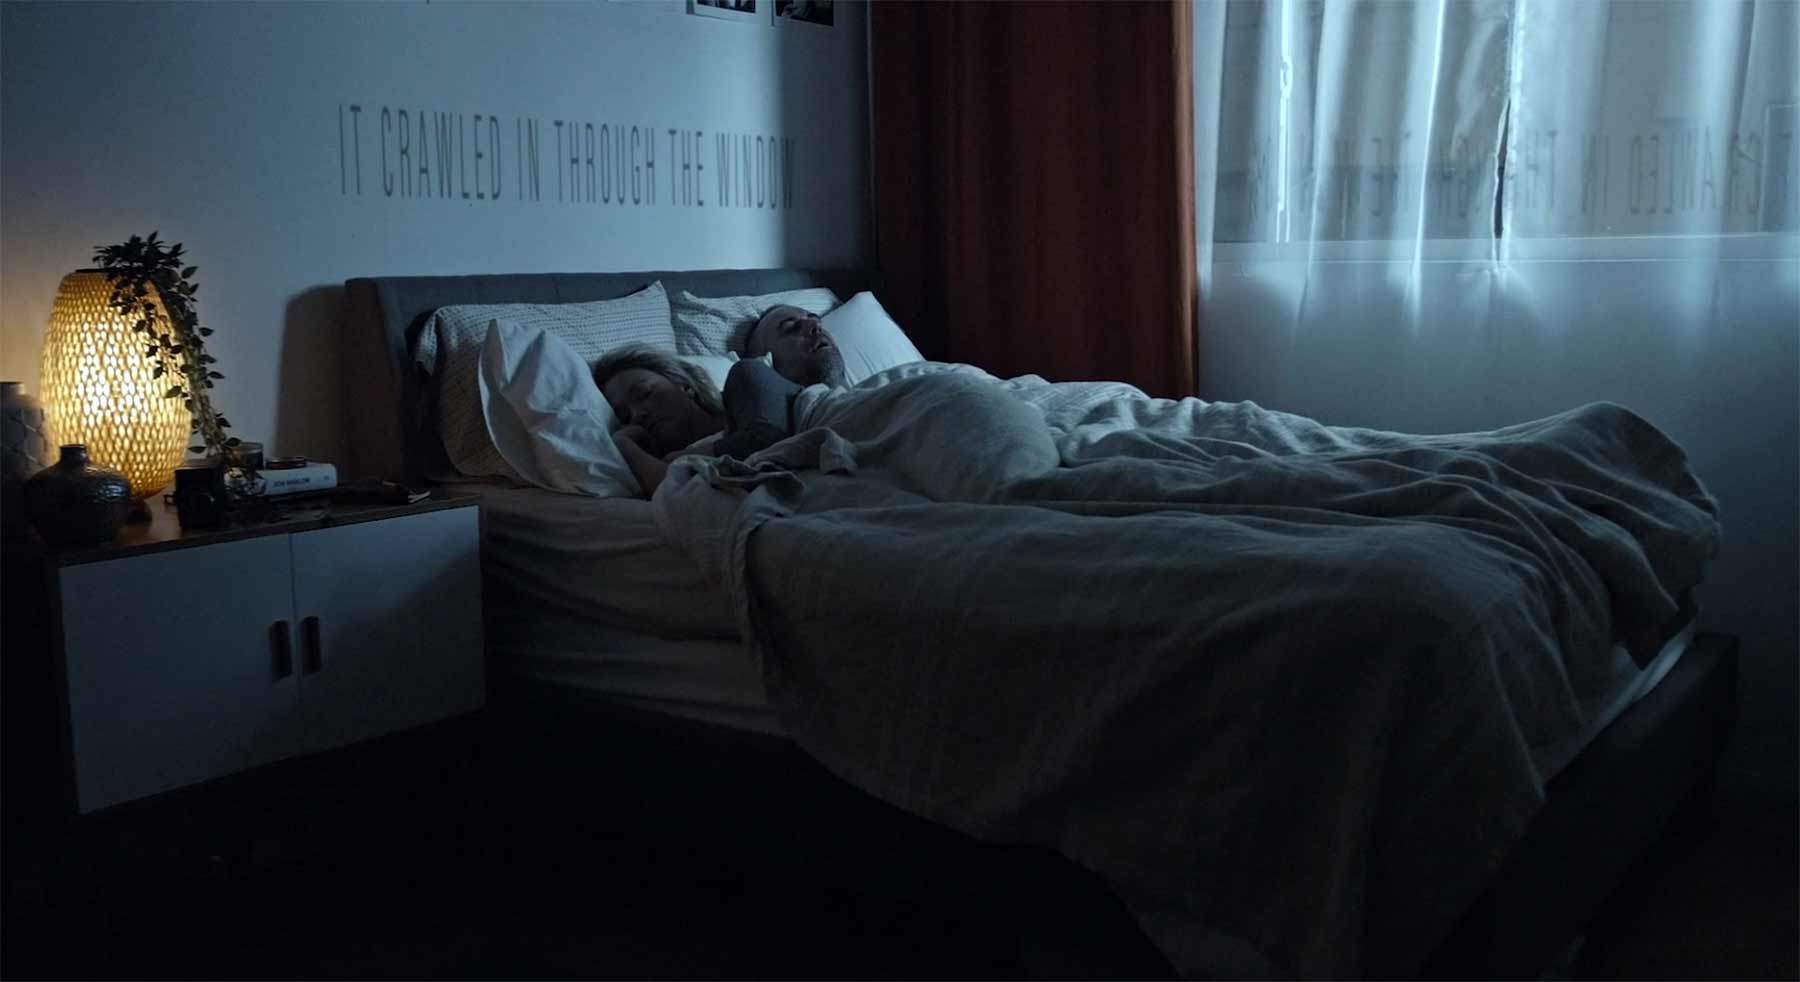 Horror-Kurzfilm: "It Crawled In Through The Window" it-crawled-in-through-the-window-kurzfilm 